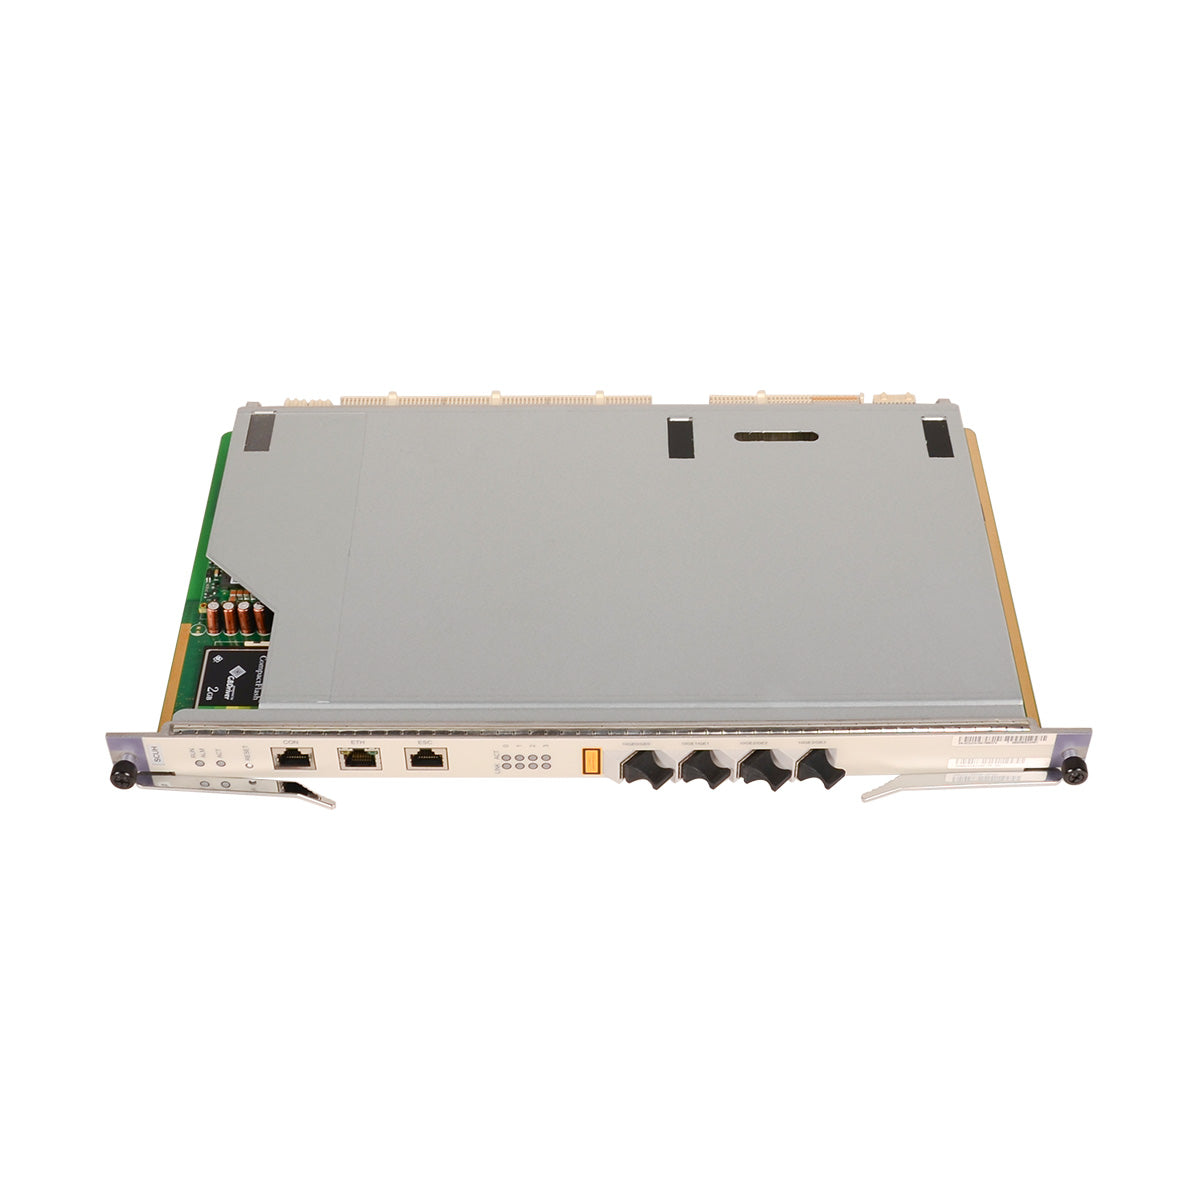 Huawei H801SCUH Main Control Board for MA5680T/MA5683T OLT